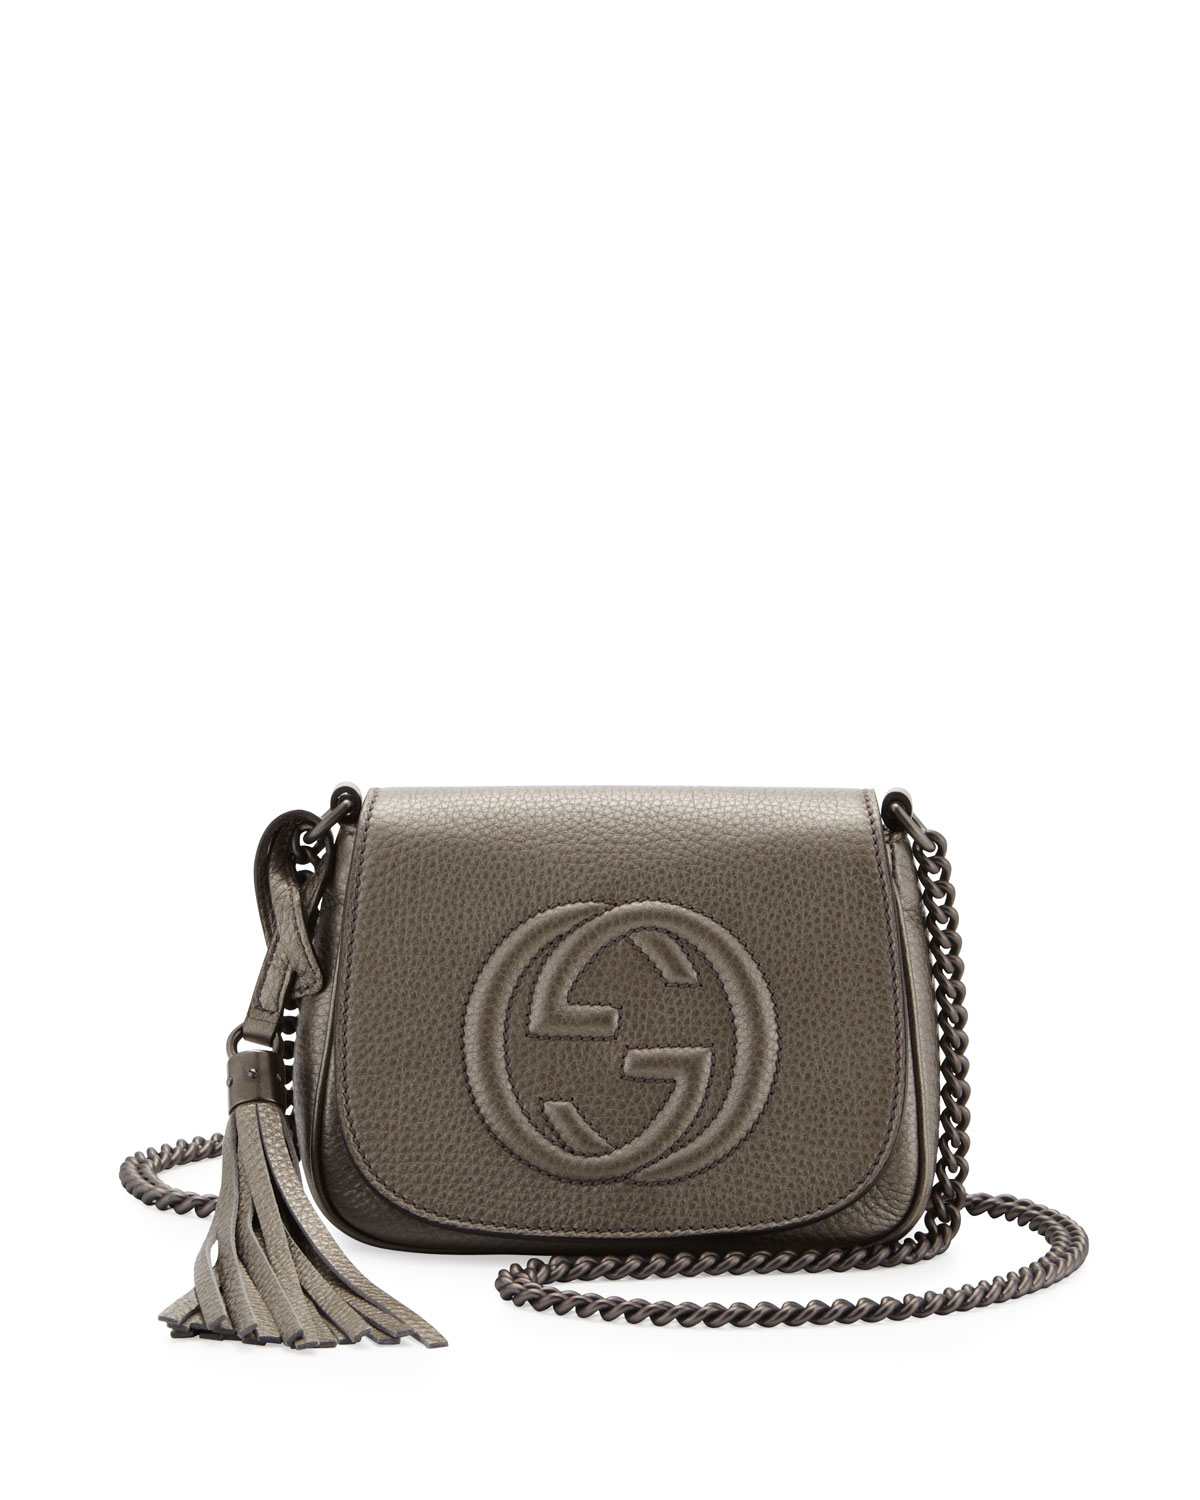 Gucci Soho Metallic Leather Chain Crossbody Bag in Gray (Gunmetal) | Lyst